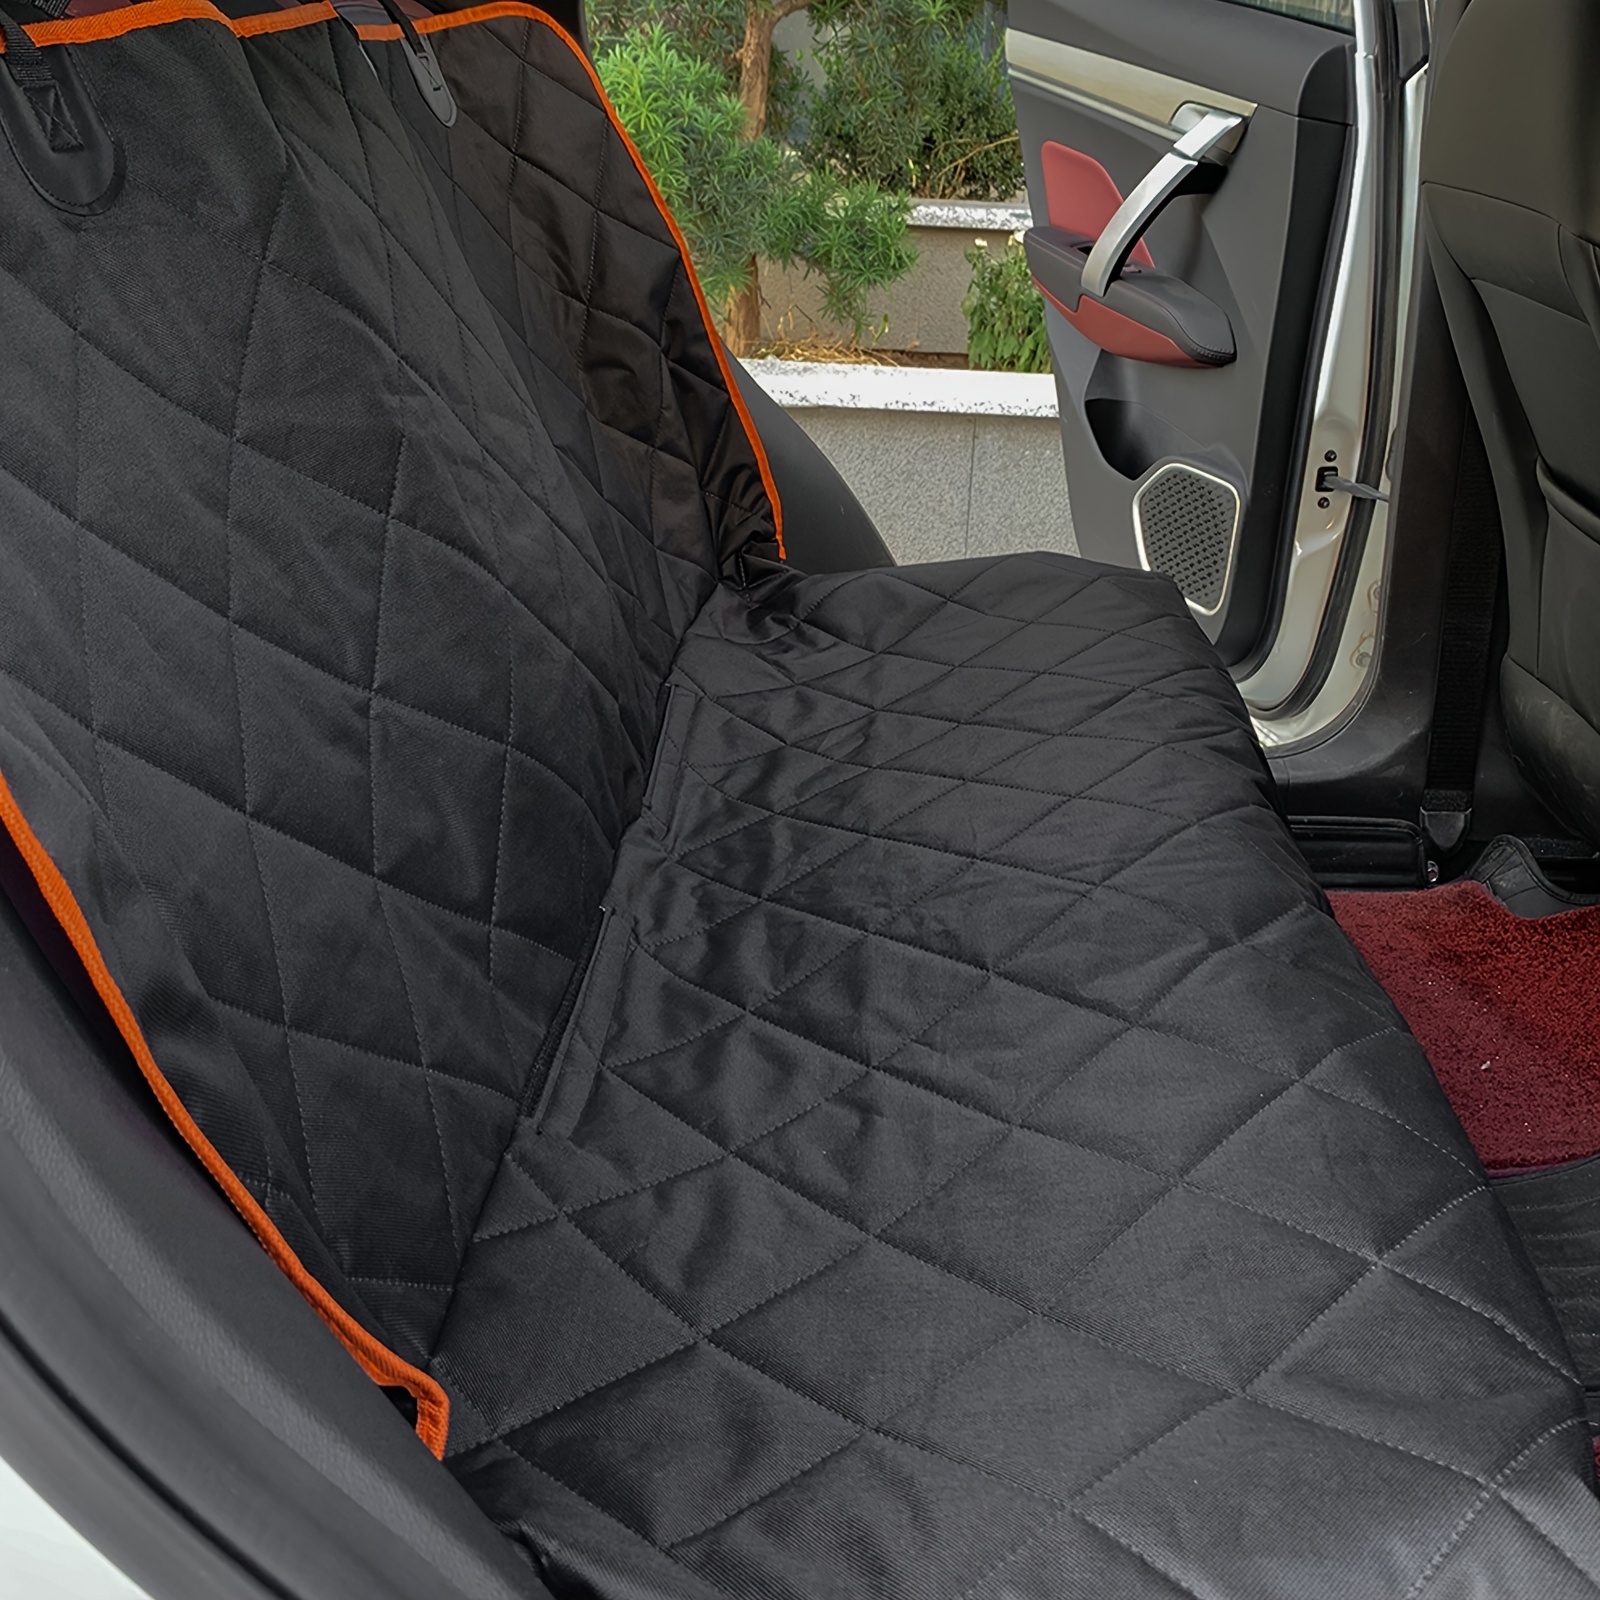 Car Rear Pet Mat, Dog Car Seat Cover, Dirt-resistant And Scratch-resistant Mat, Oxford Cloth Pet Car Hammock